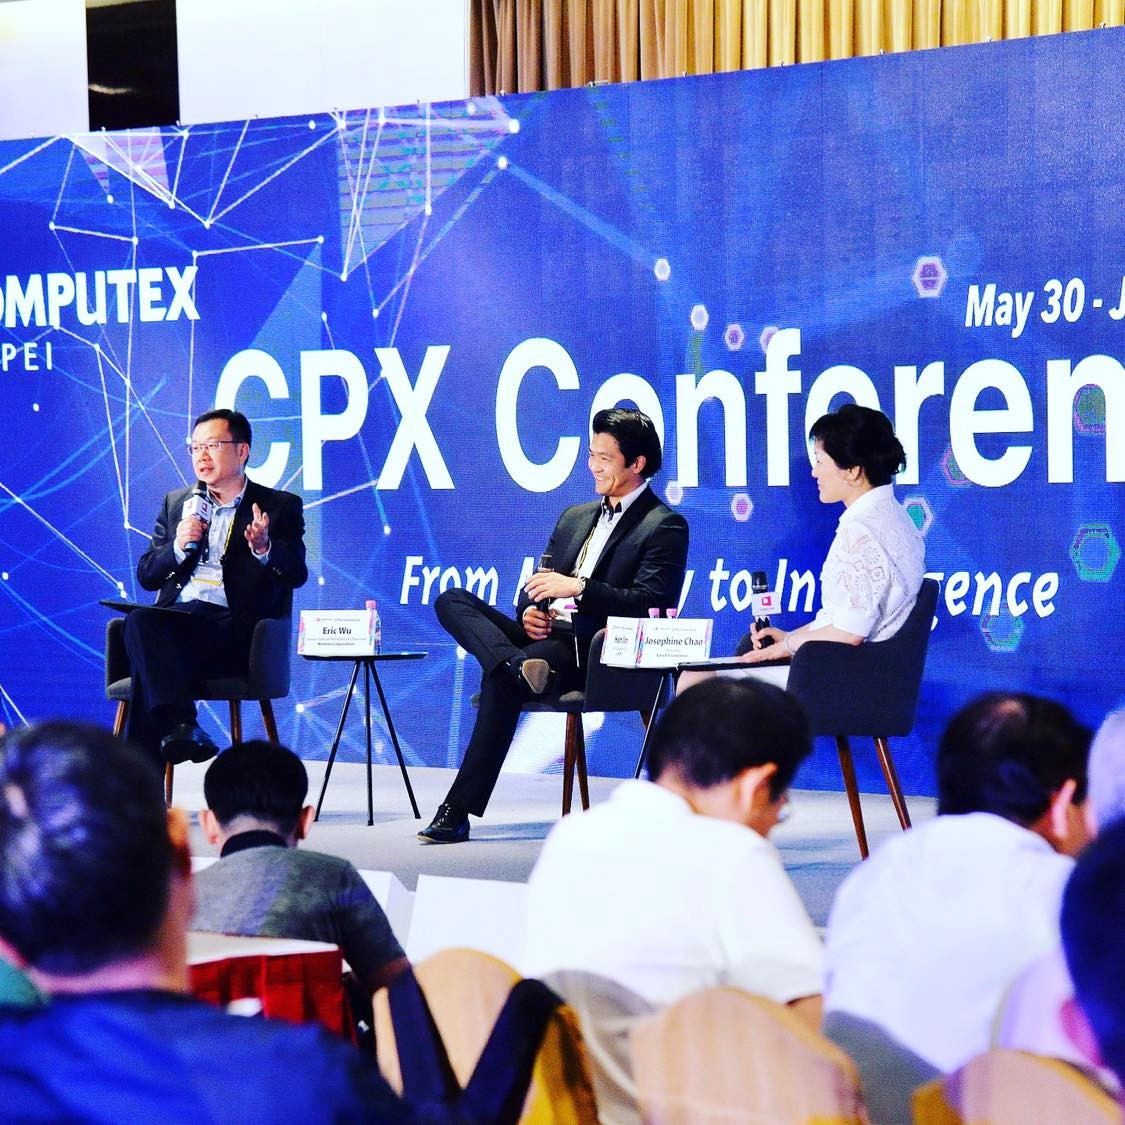 Computex Taipei 2017 – CPX Conference